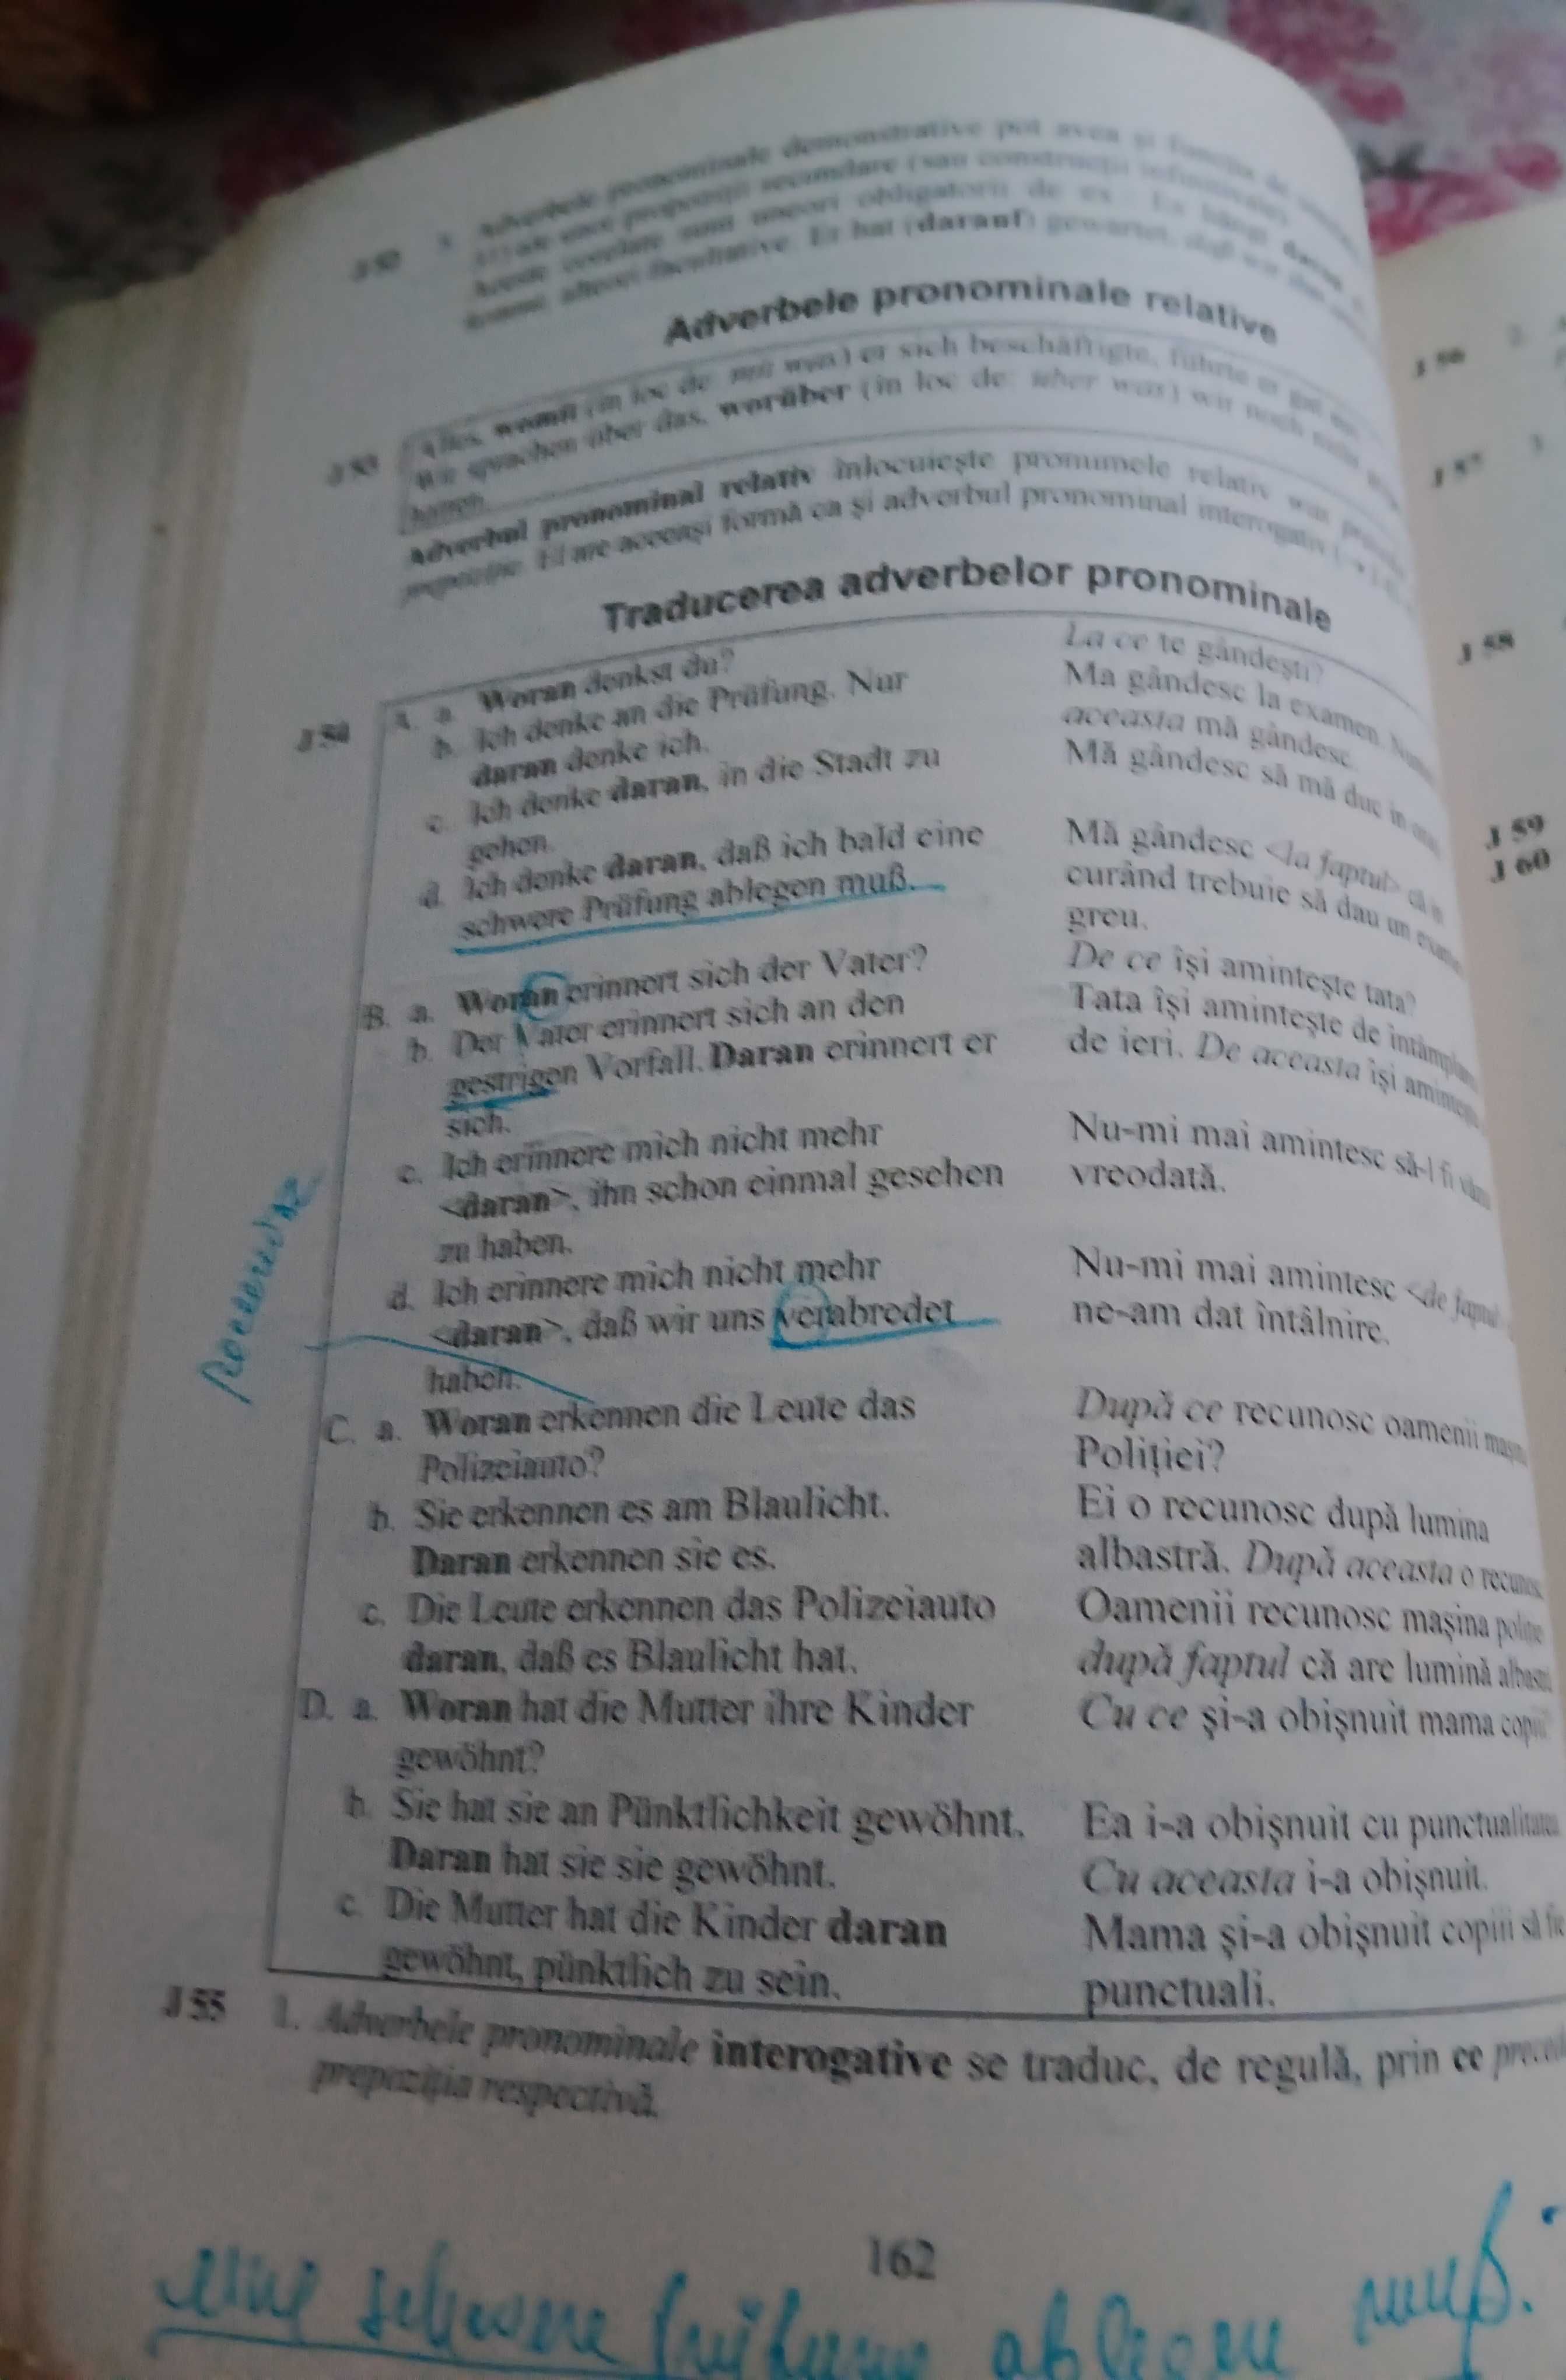 Gramatica lb. Germane